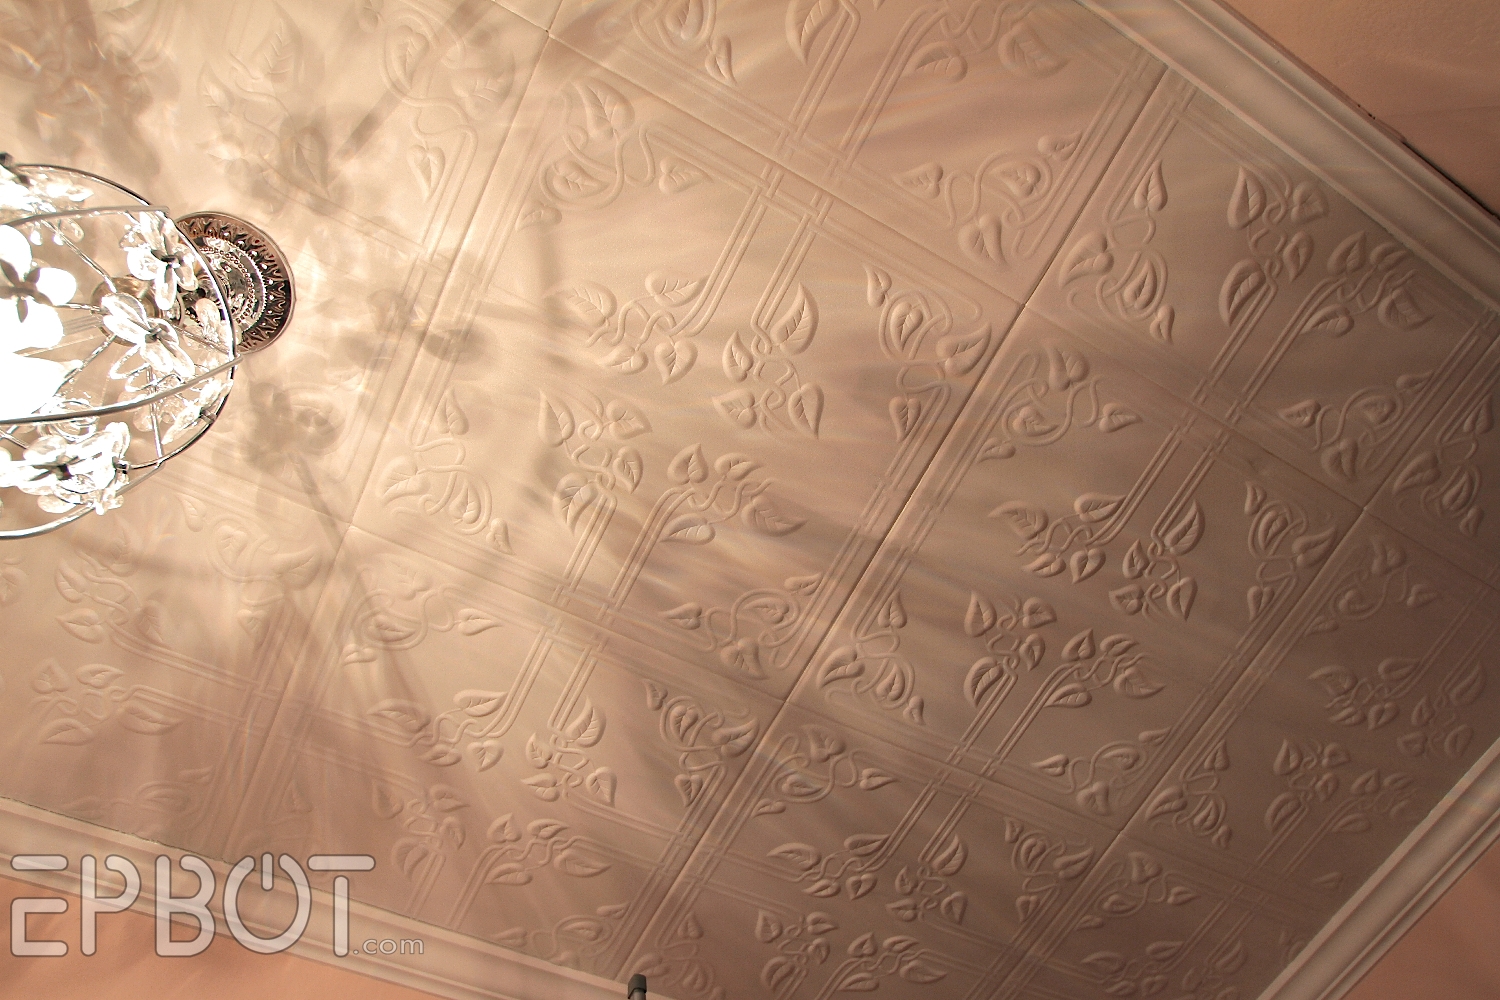 Glue Up Ceiling Tiles Over Popcorn Glue Up Ceiling Tiles Over Popcorn epbot diy faux tin tile ceiling 1500 X 1000